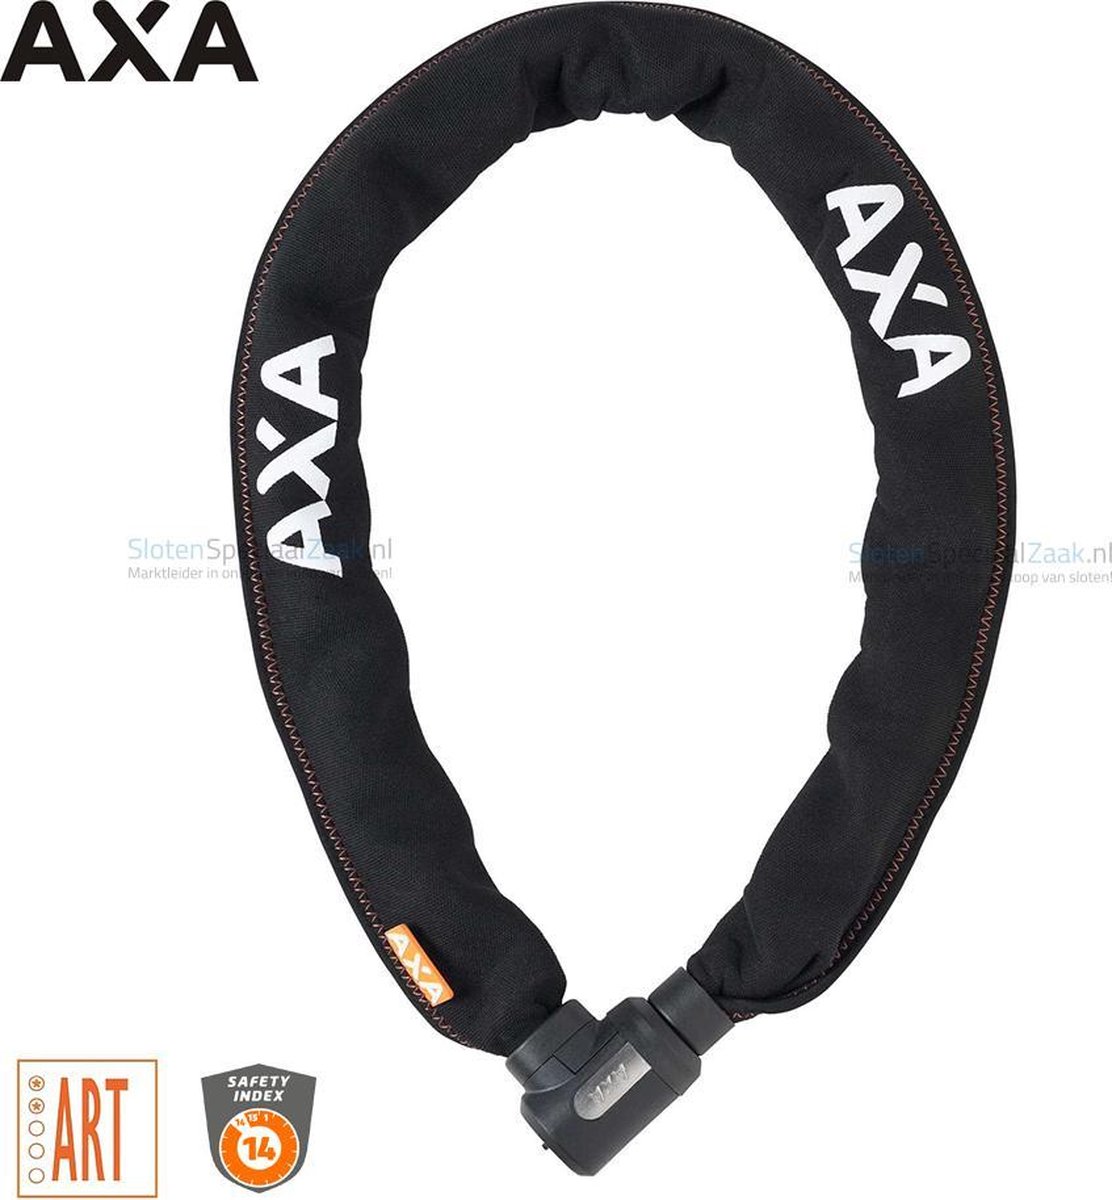 Min Verslaafd flexibel AXA Fietsslot Cherto - Kettingslot - 95cm/9mm - In hoes - Zwart | bol.com